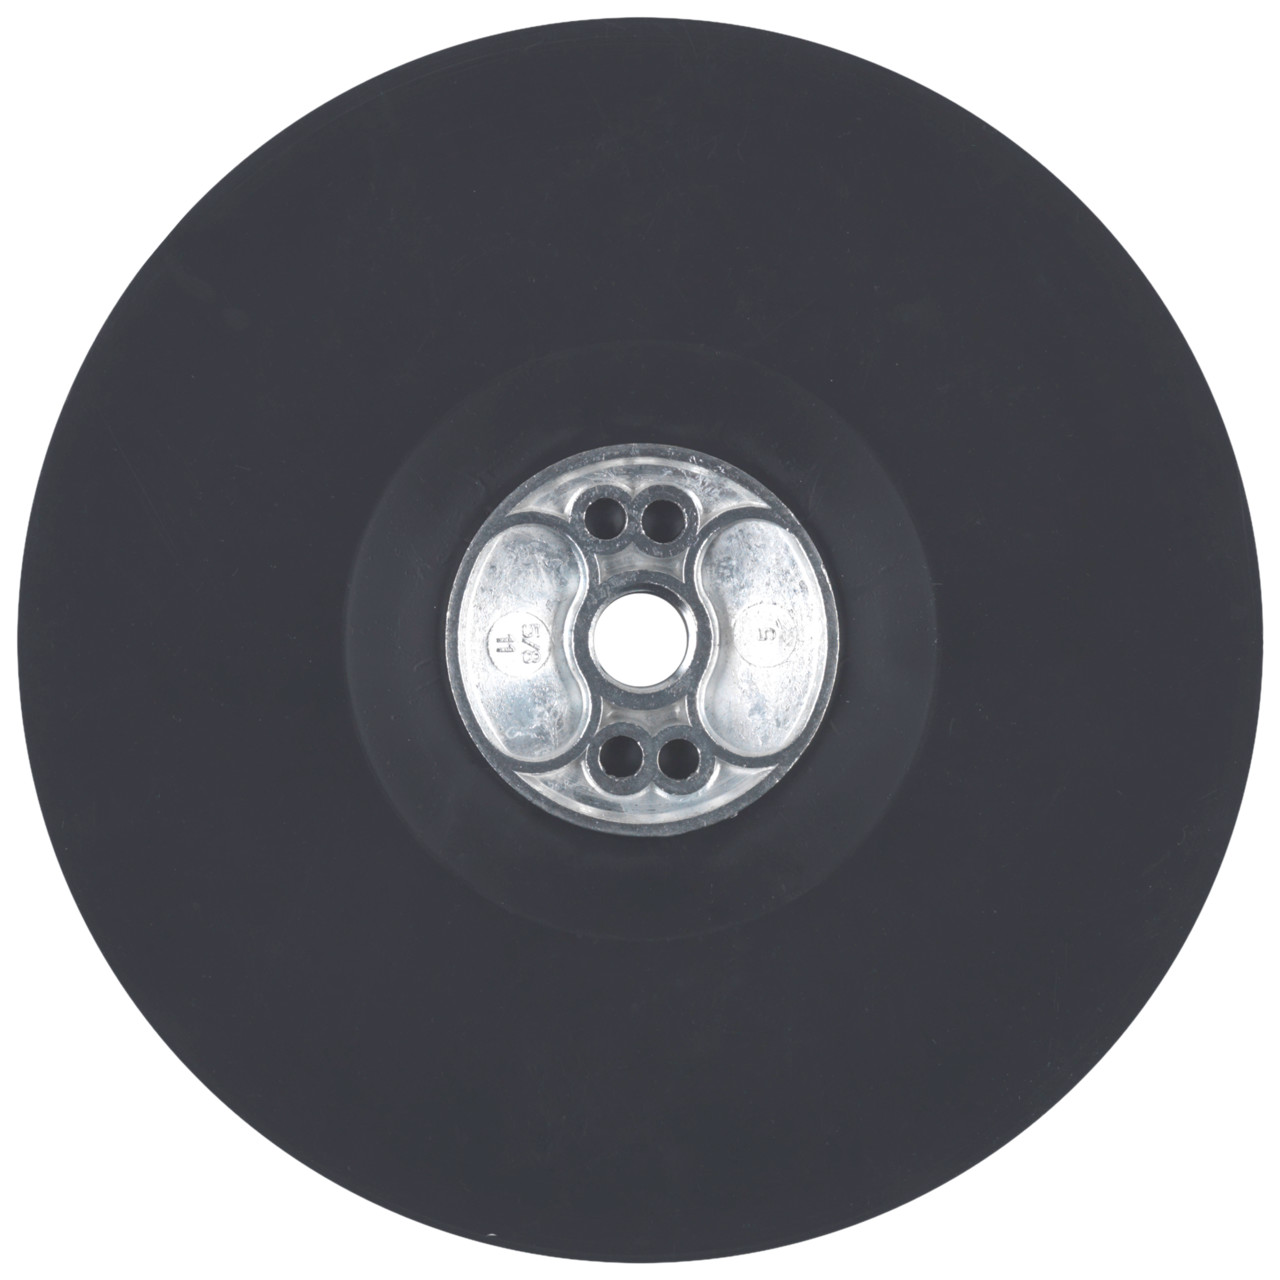 Accessori Tyrolit DxH 180x22 Per disco in fibra, durezza: HARD, forma: PAD, art. 710005